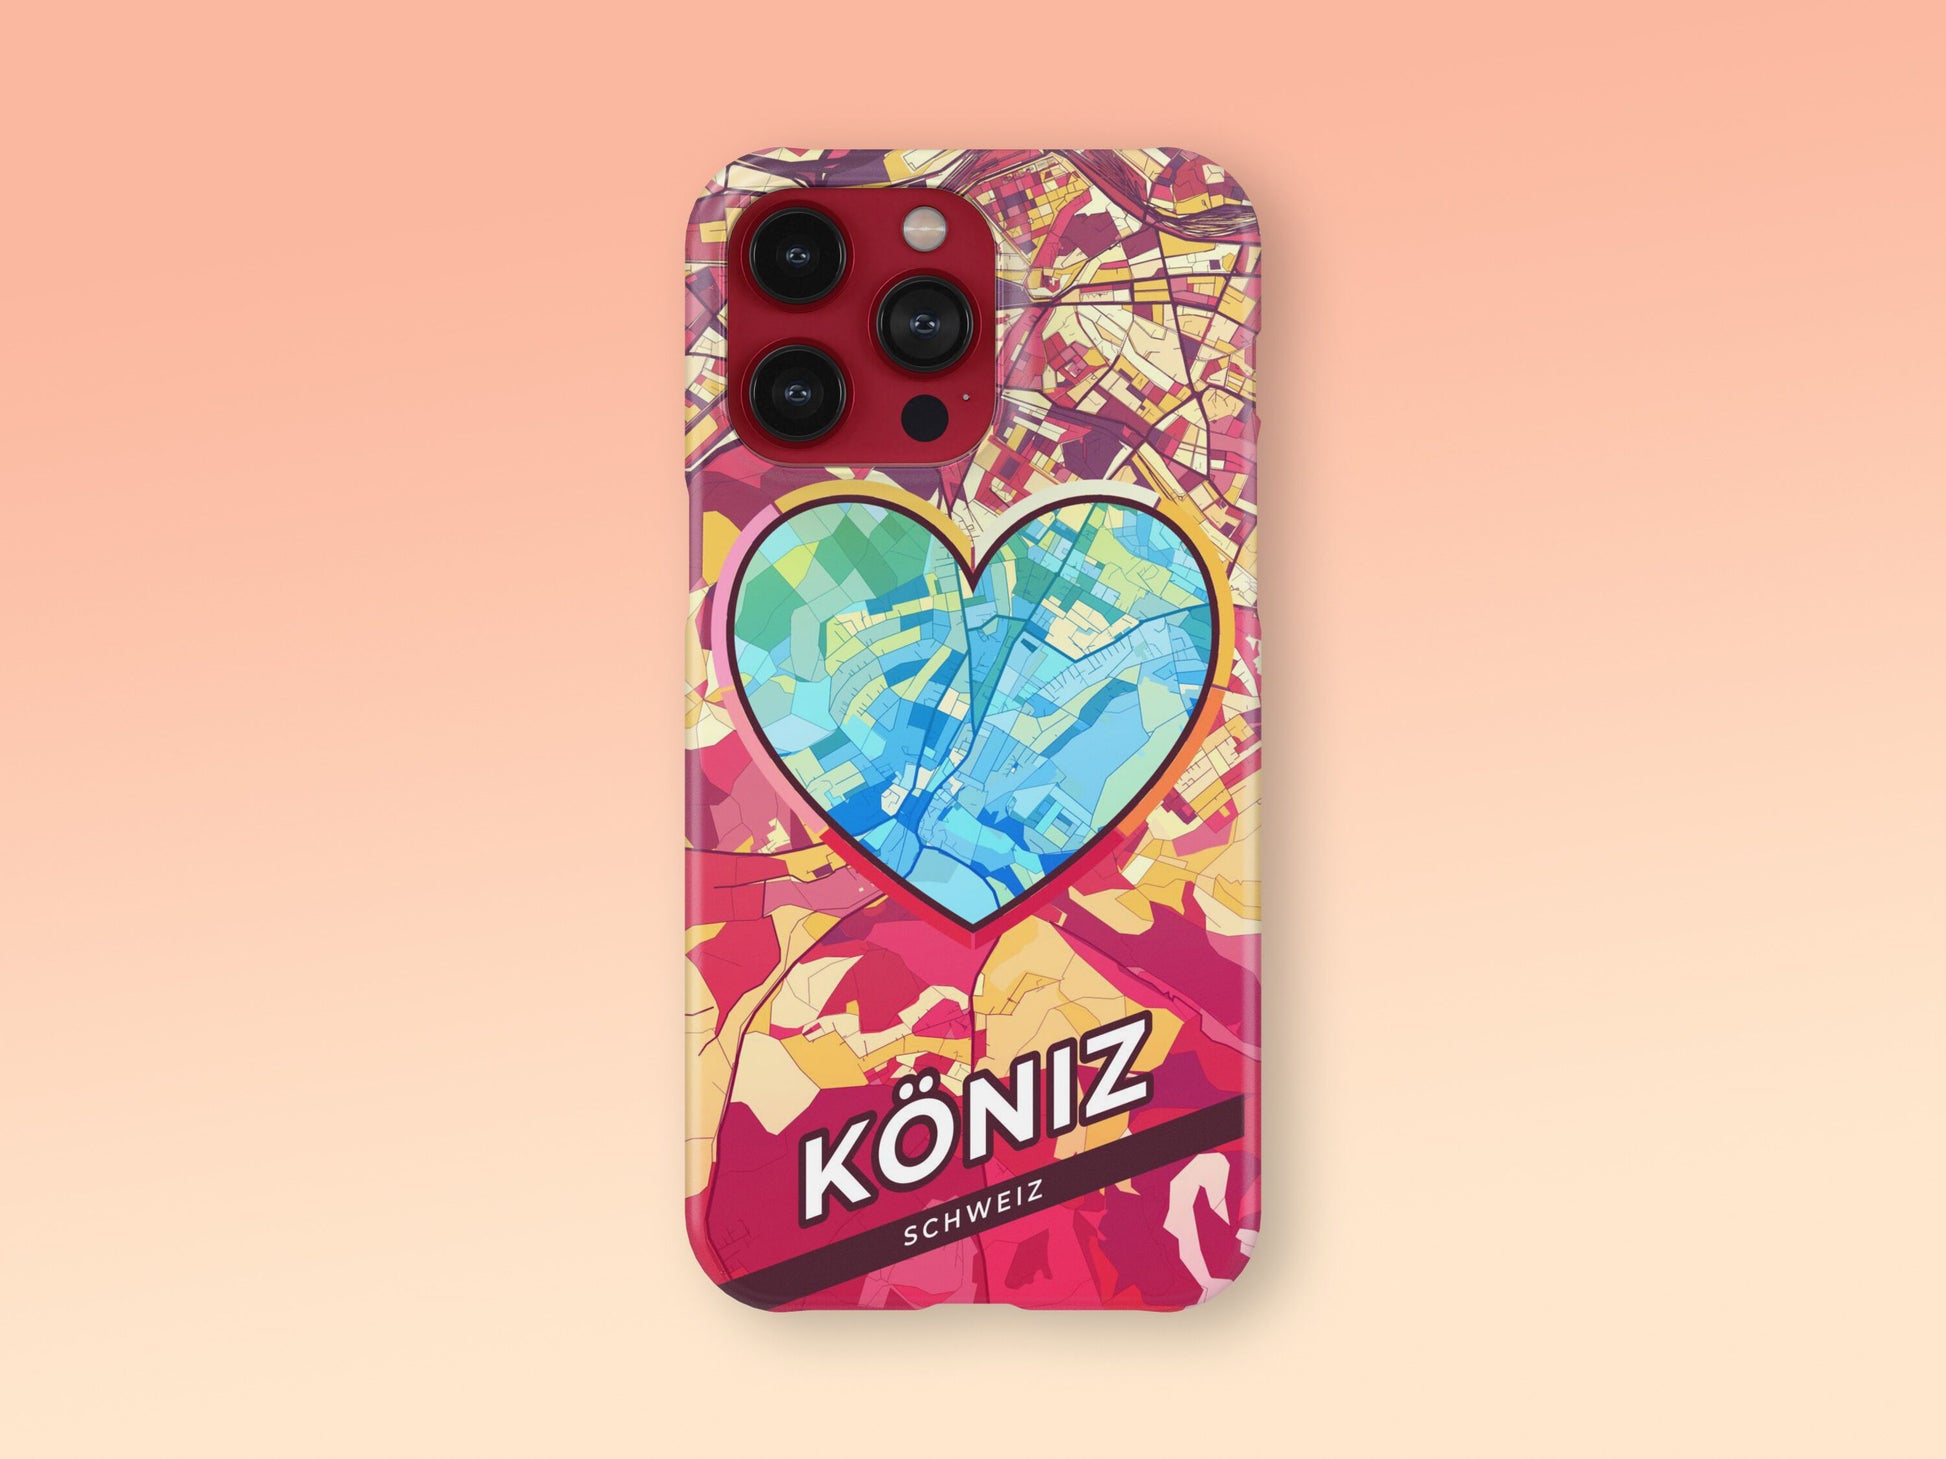 Köniz Switzerland slim phone case with colorful icon. Birthday, wedding or housewarming gift. Couple match cases. 2